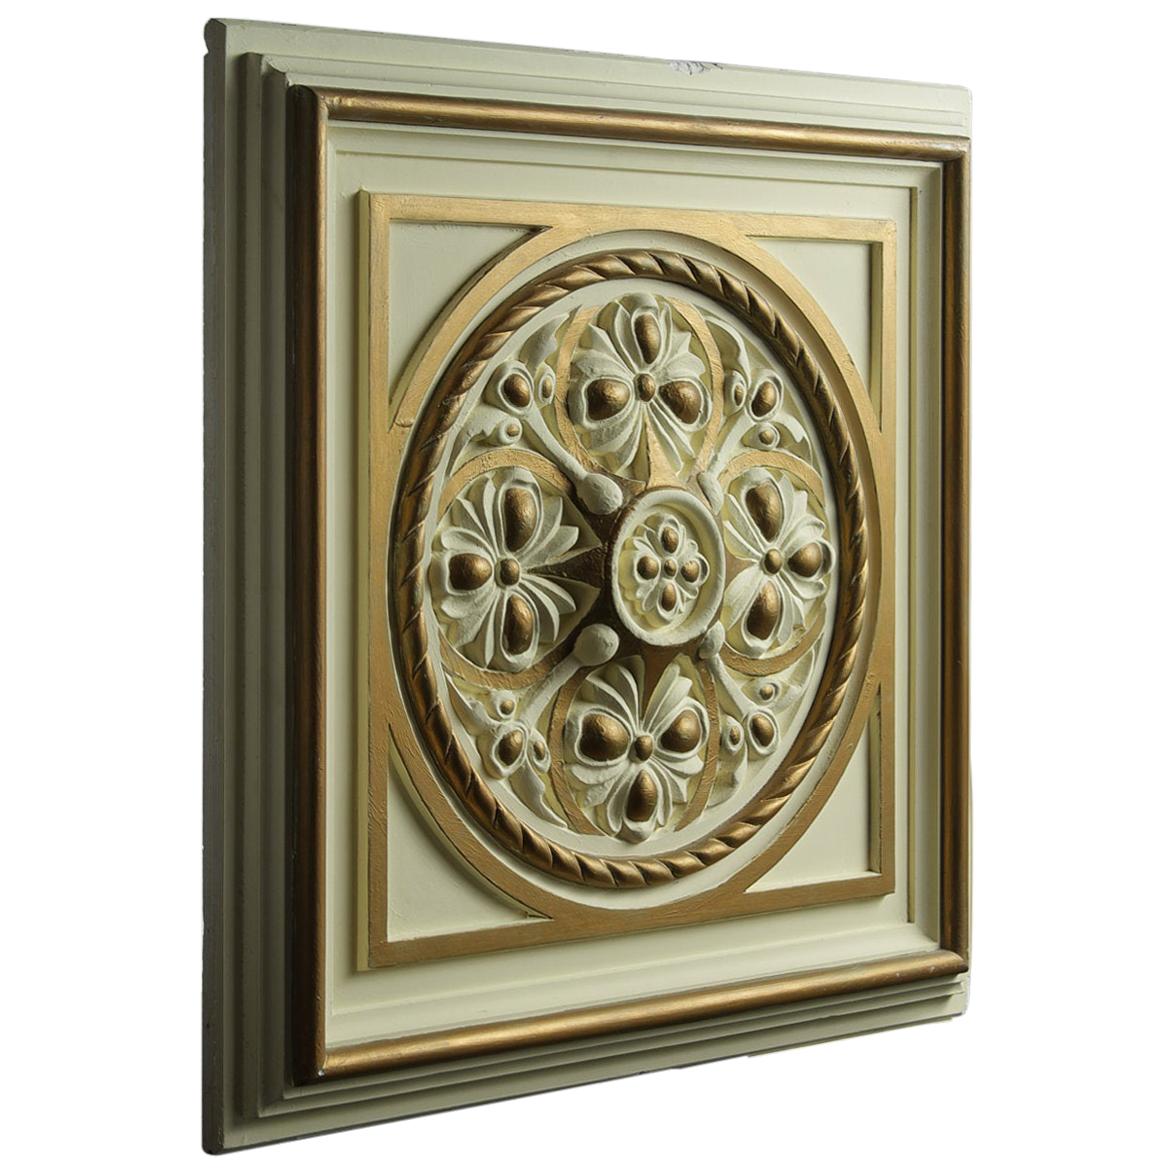 Decorative Plaster Ceiling Panels / Tiles, 20th Century For Sale